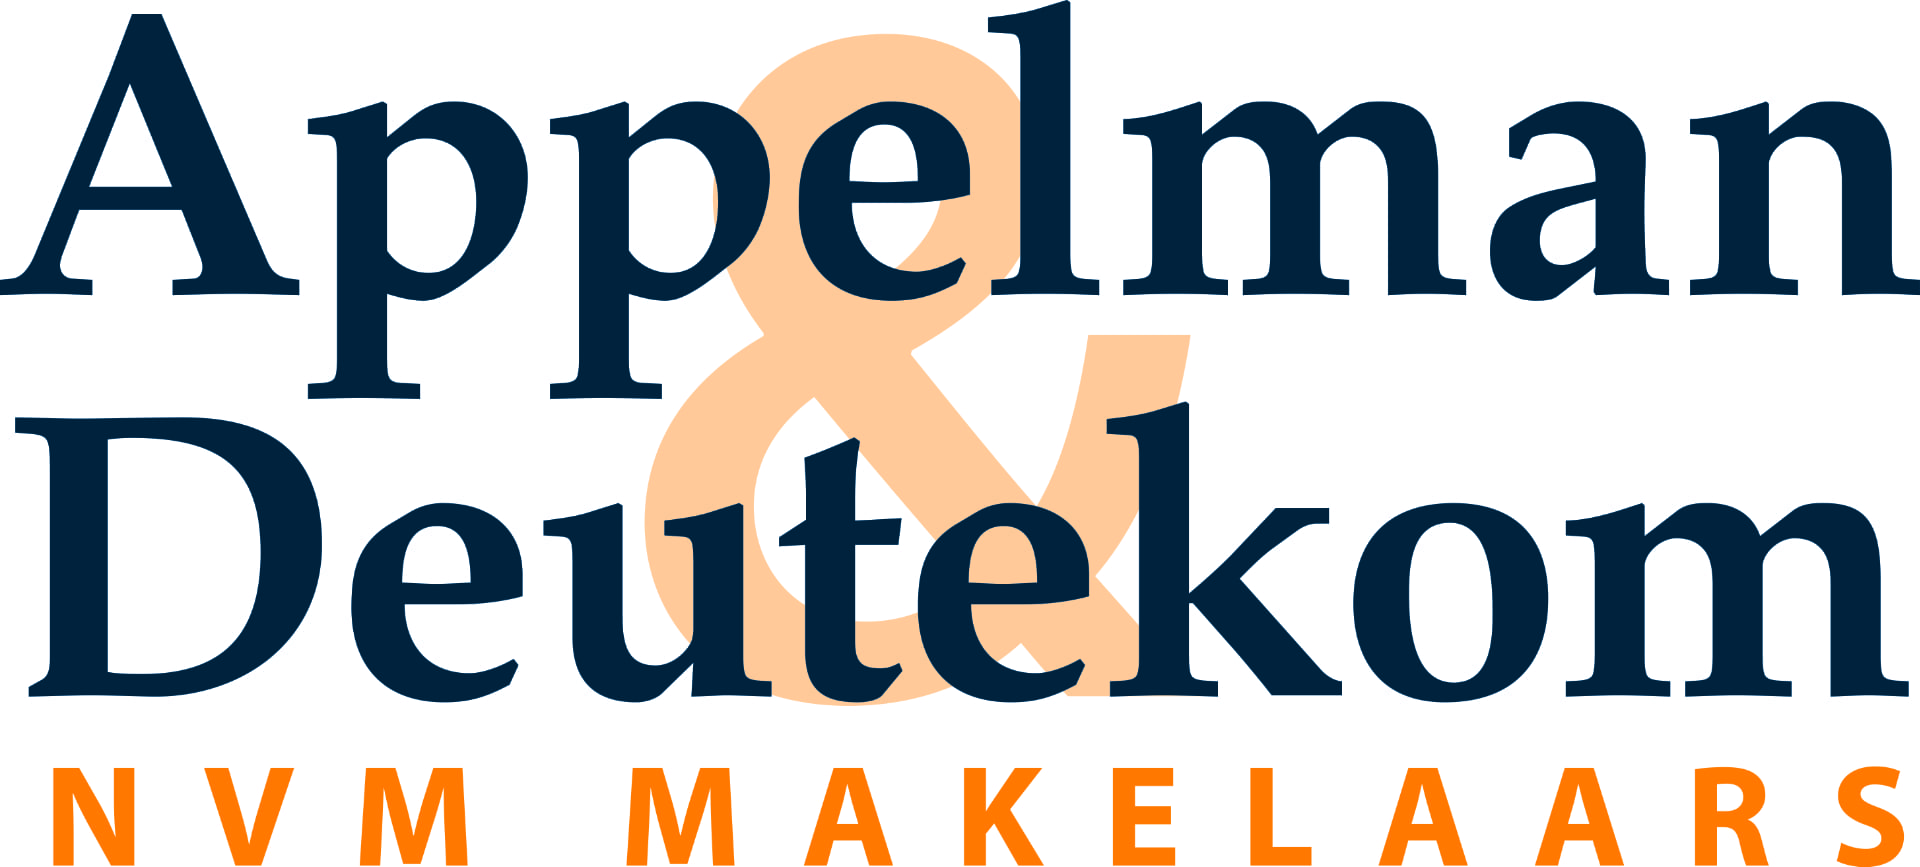 Appelman & Deutekom logo